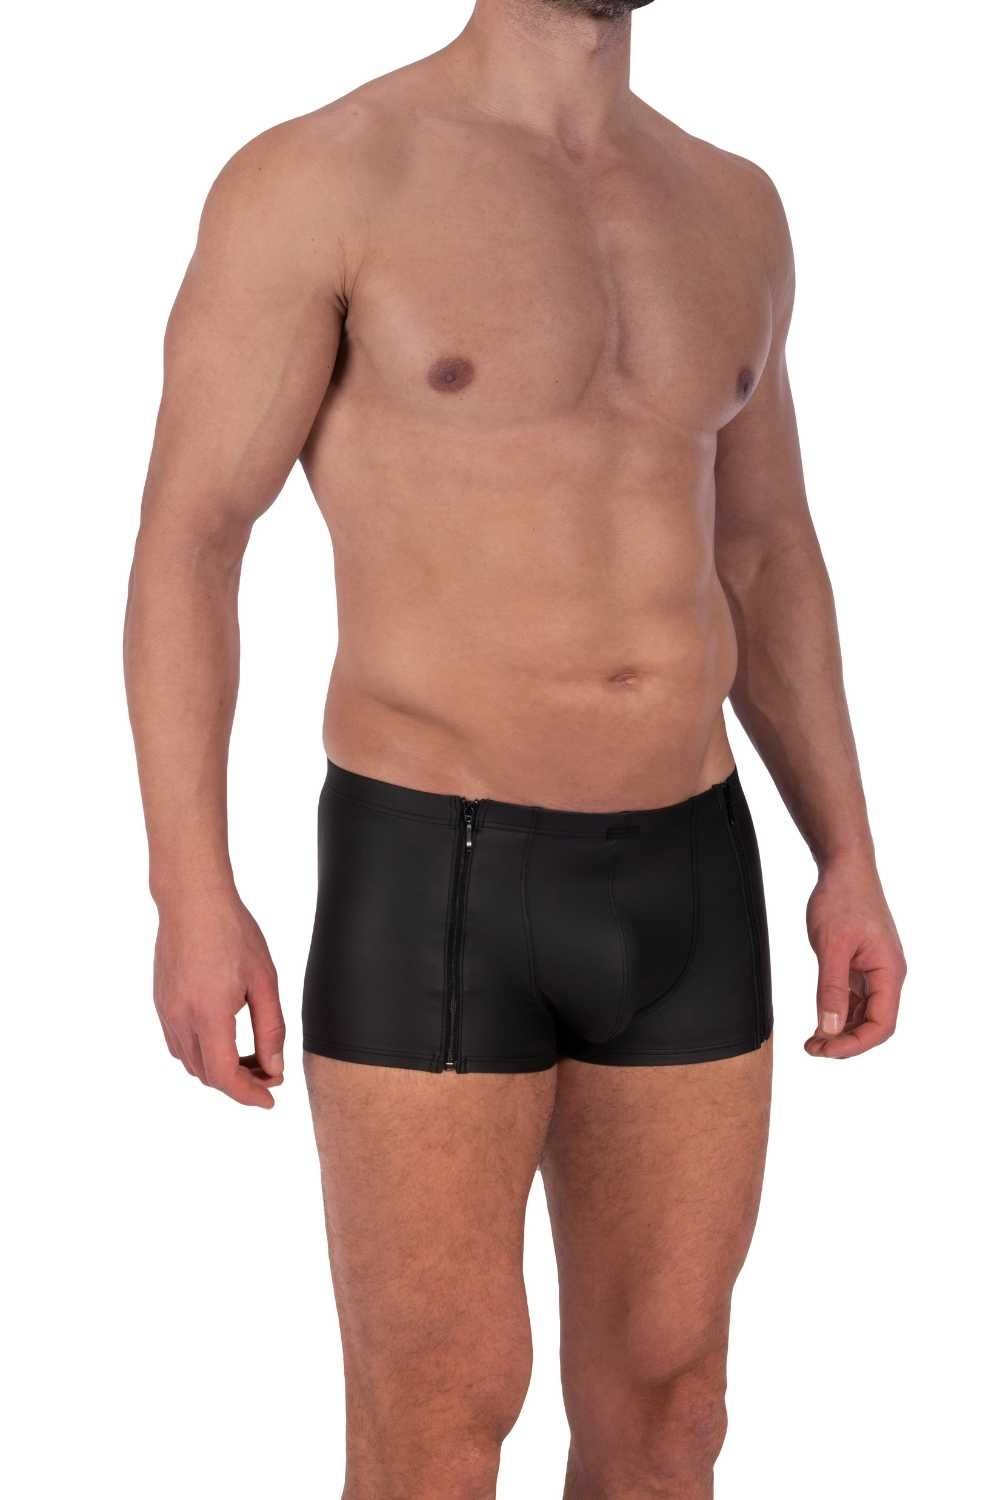 MANSTORE Boxer Manstore M2326 Zipped Pants, black